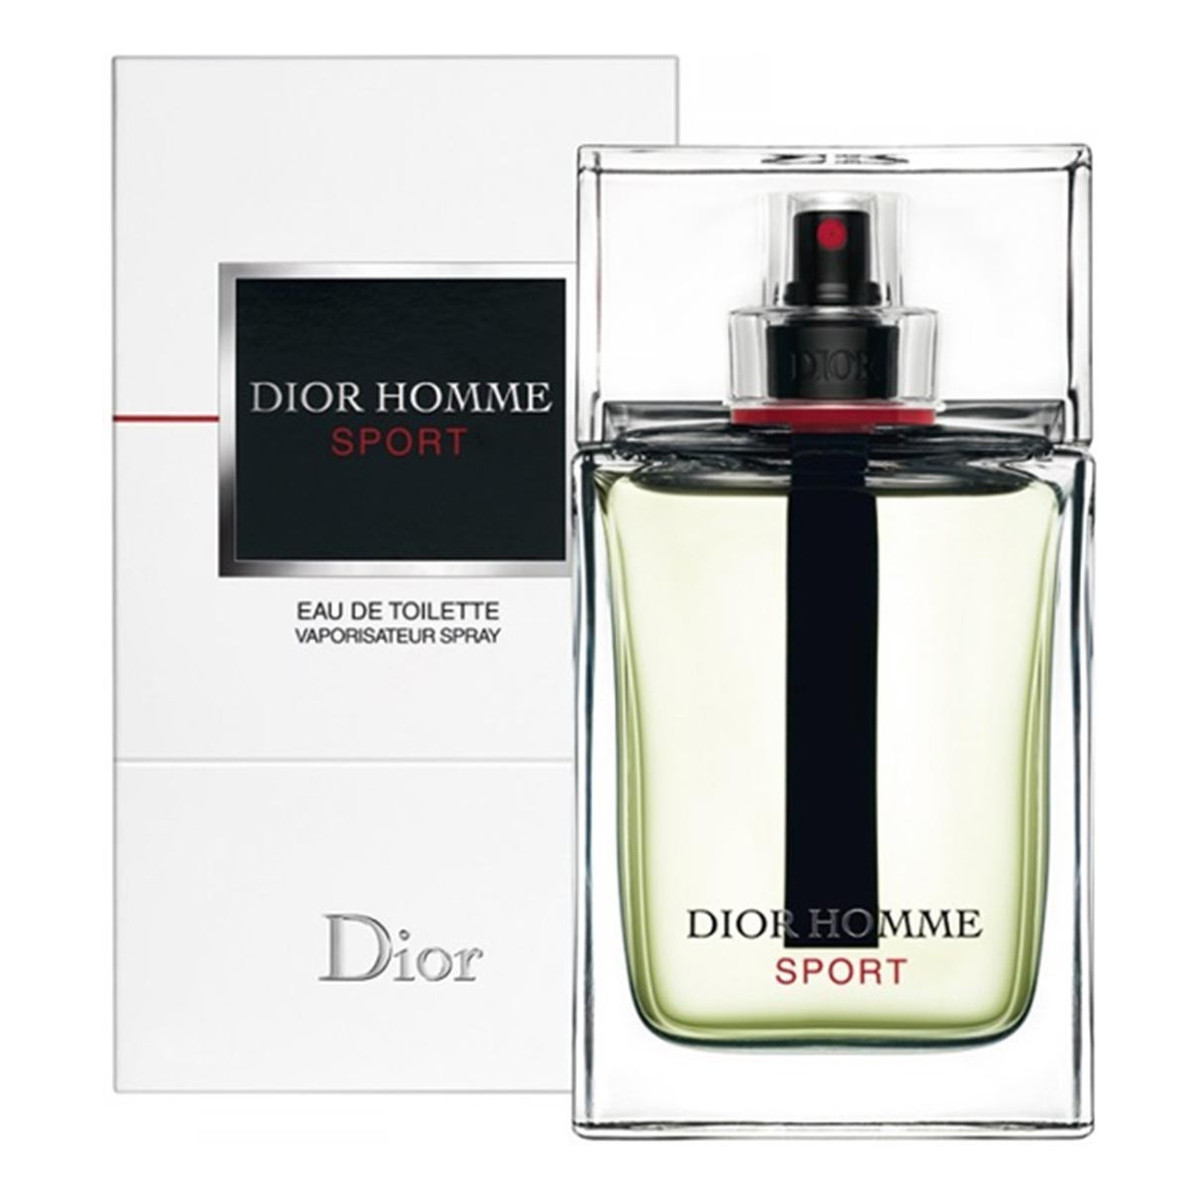 Dior Homme Sport woda toaletowa 75ml